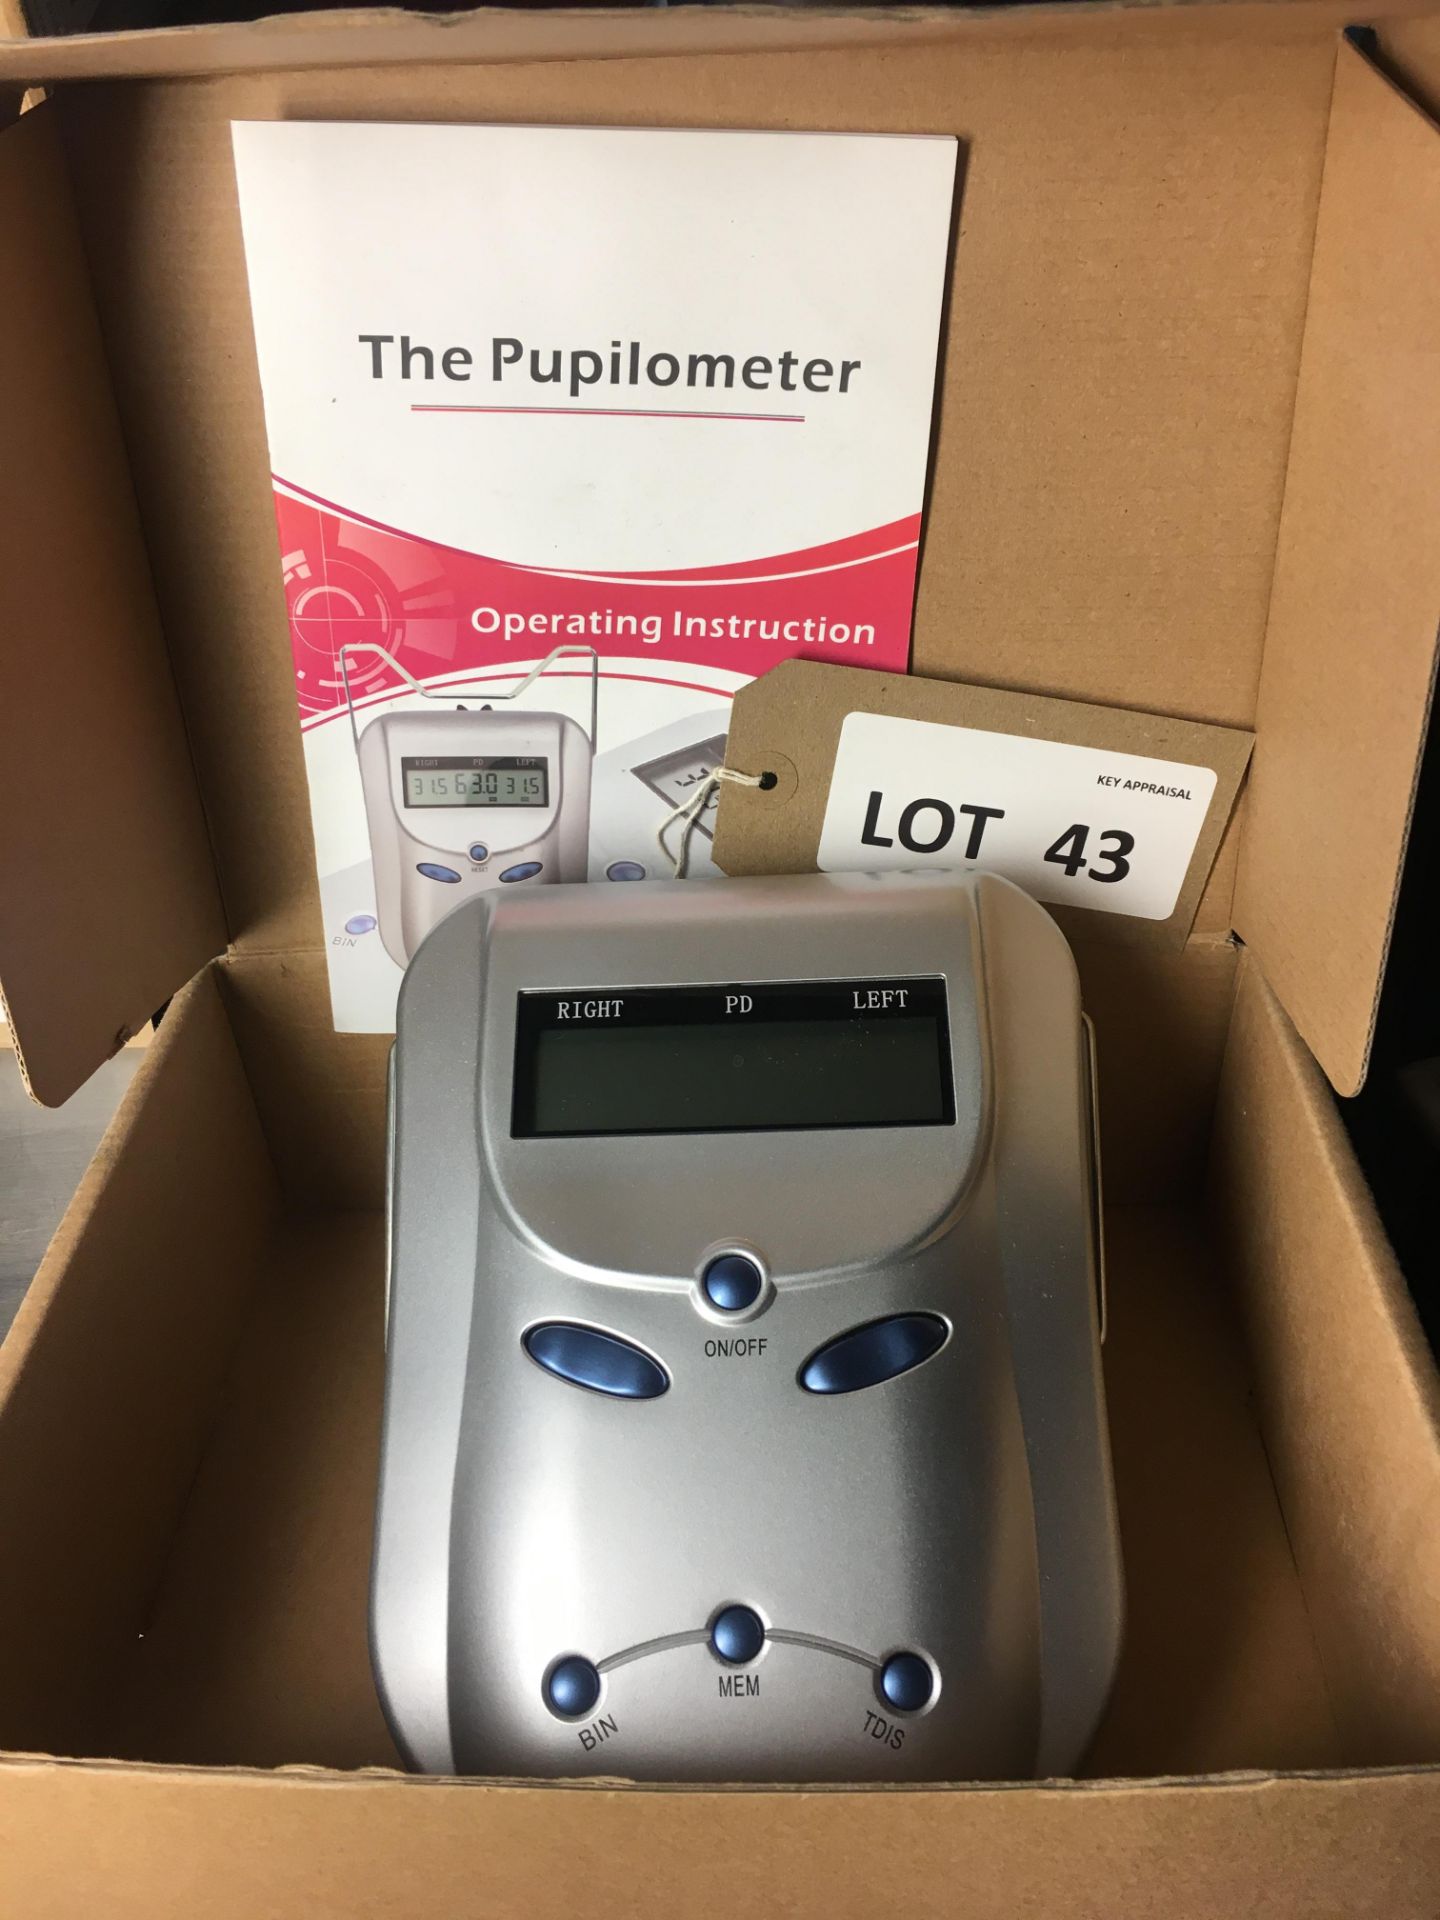 The Pupilometer digital optical precision measurement instrument